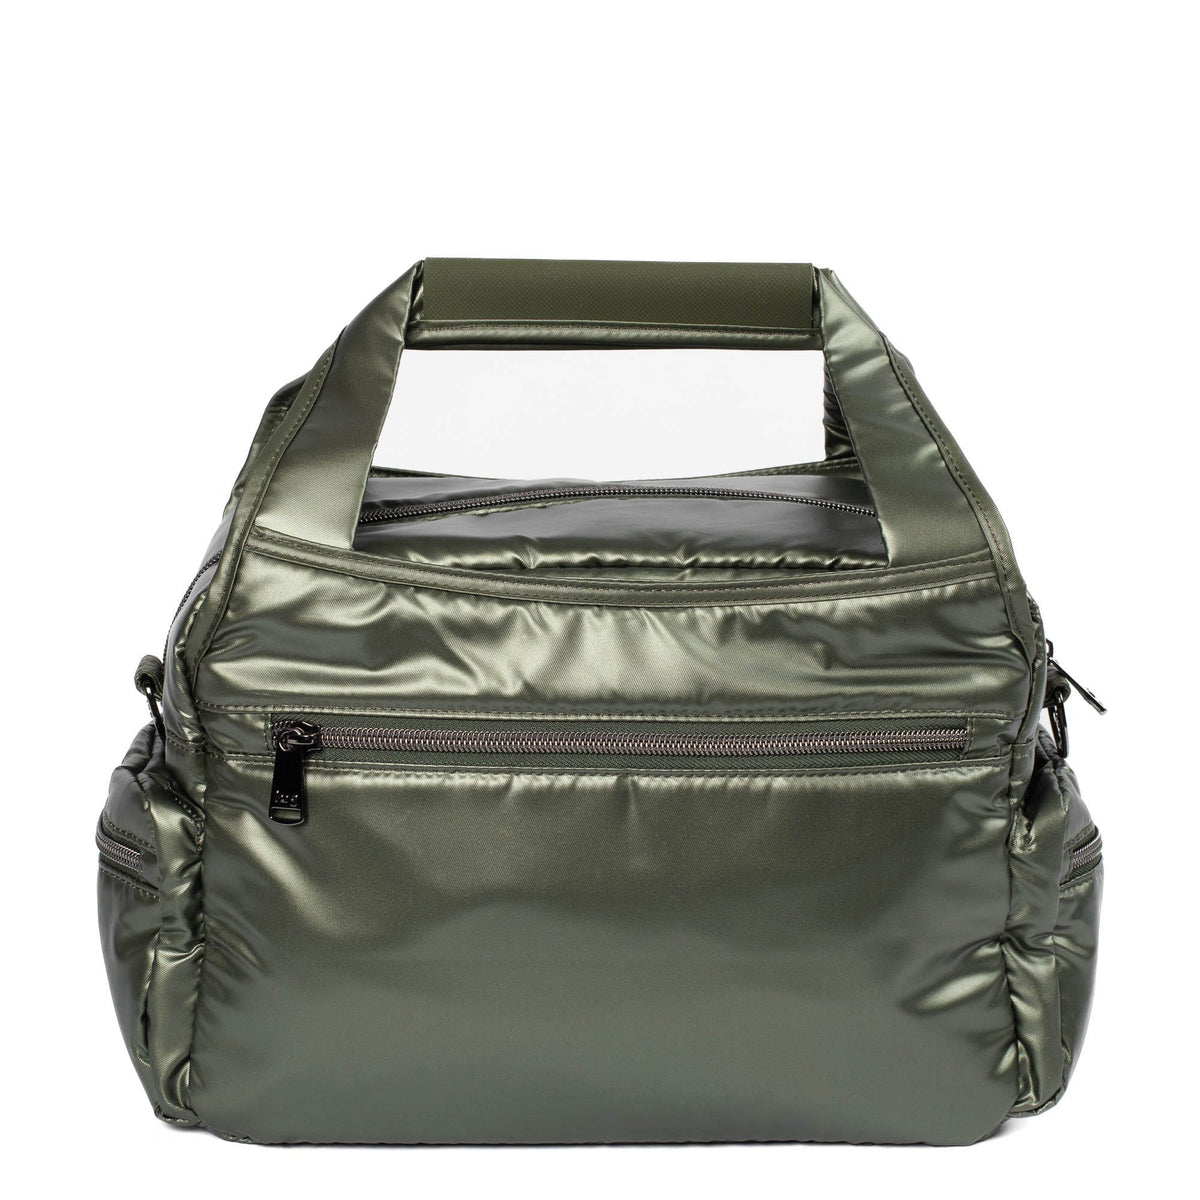 Buy Brandroot® Pu Synthetic Leather Women's Satchel Bag | Daily use handbag  for ladies | girl's handbag (Black) at Amazon.in